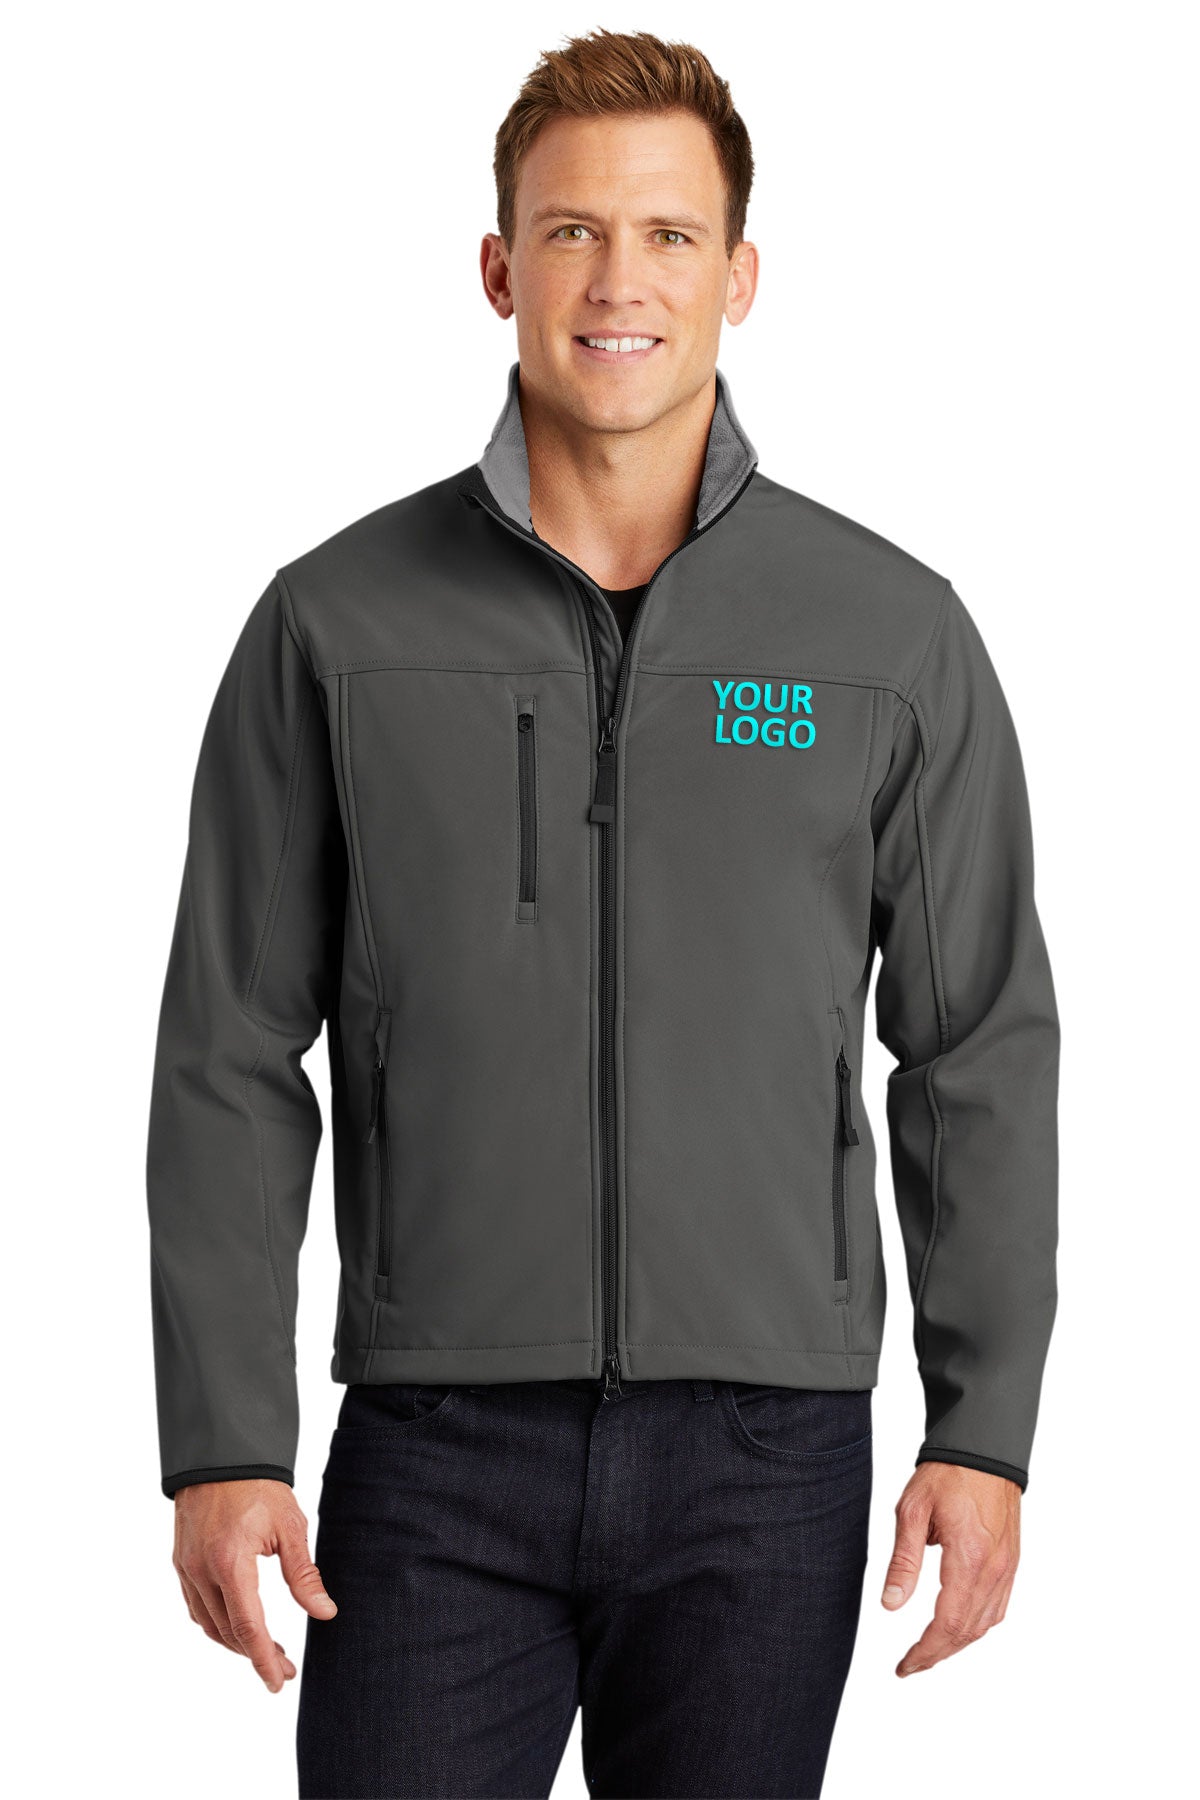 port authority smoke grey/ chrome tlj790 business jackets with logo